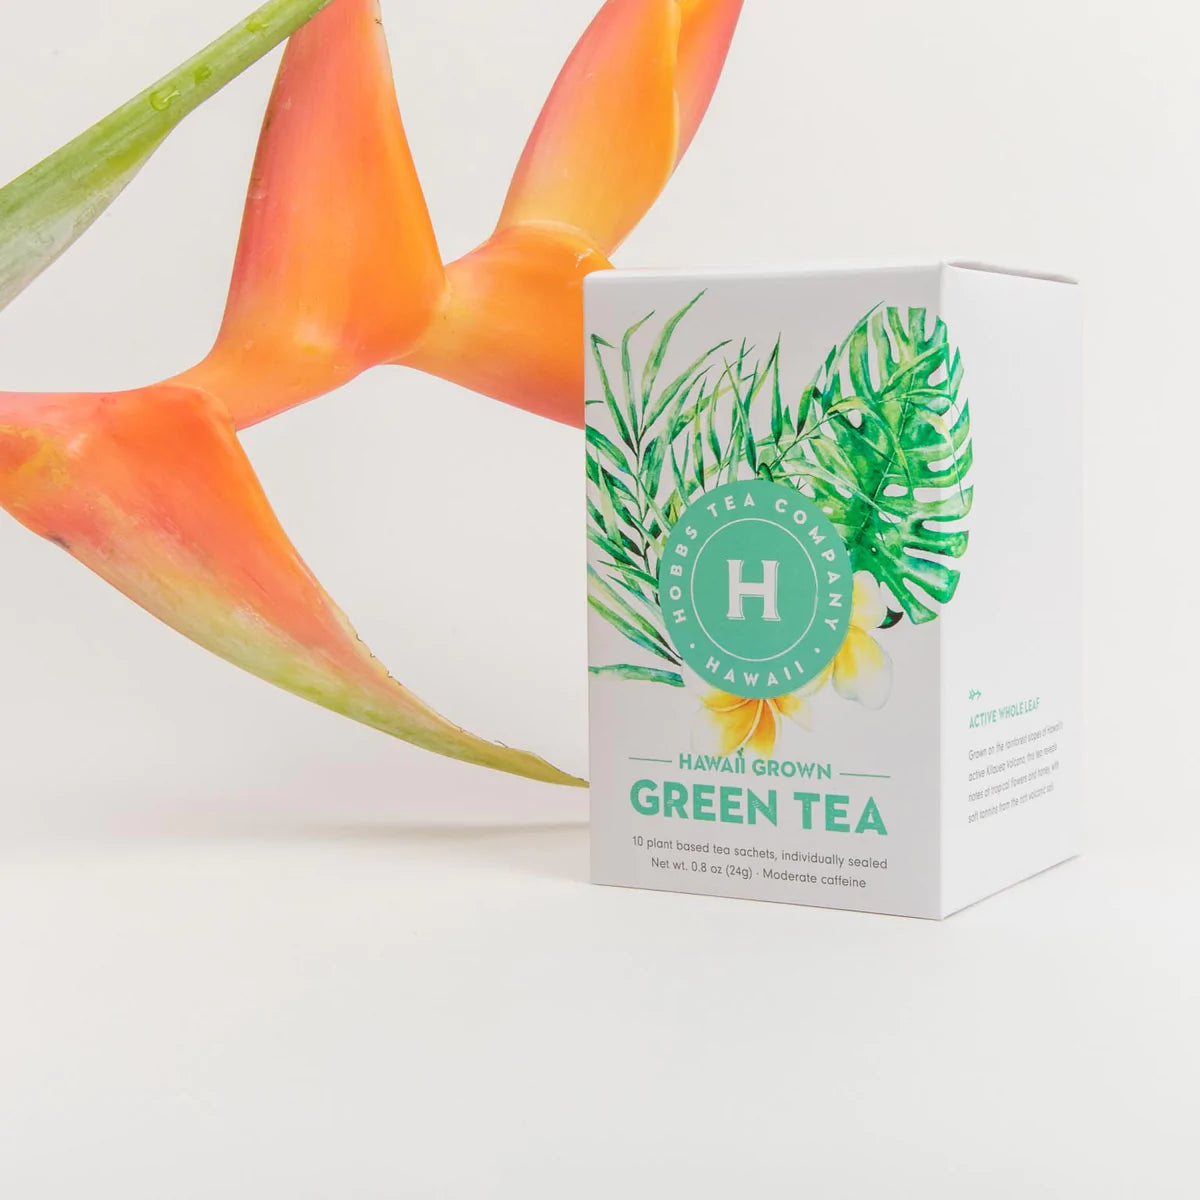 Hobbs tea - green tea box